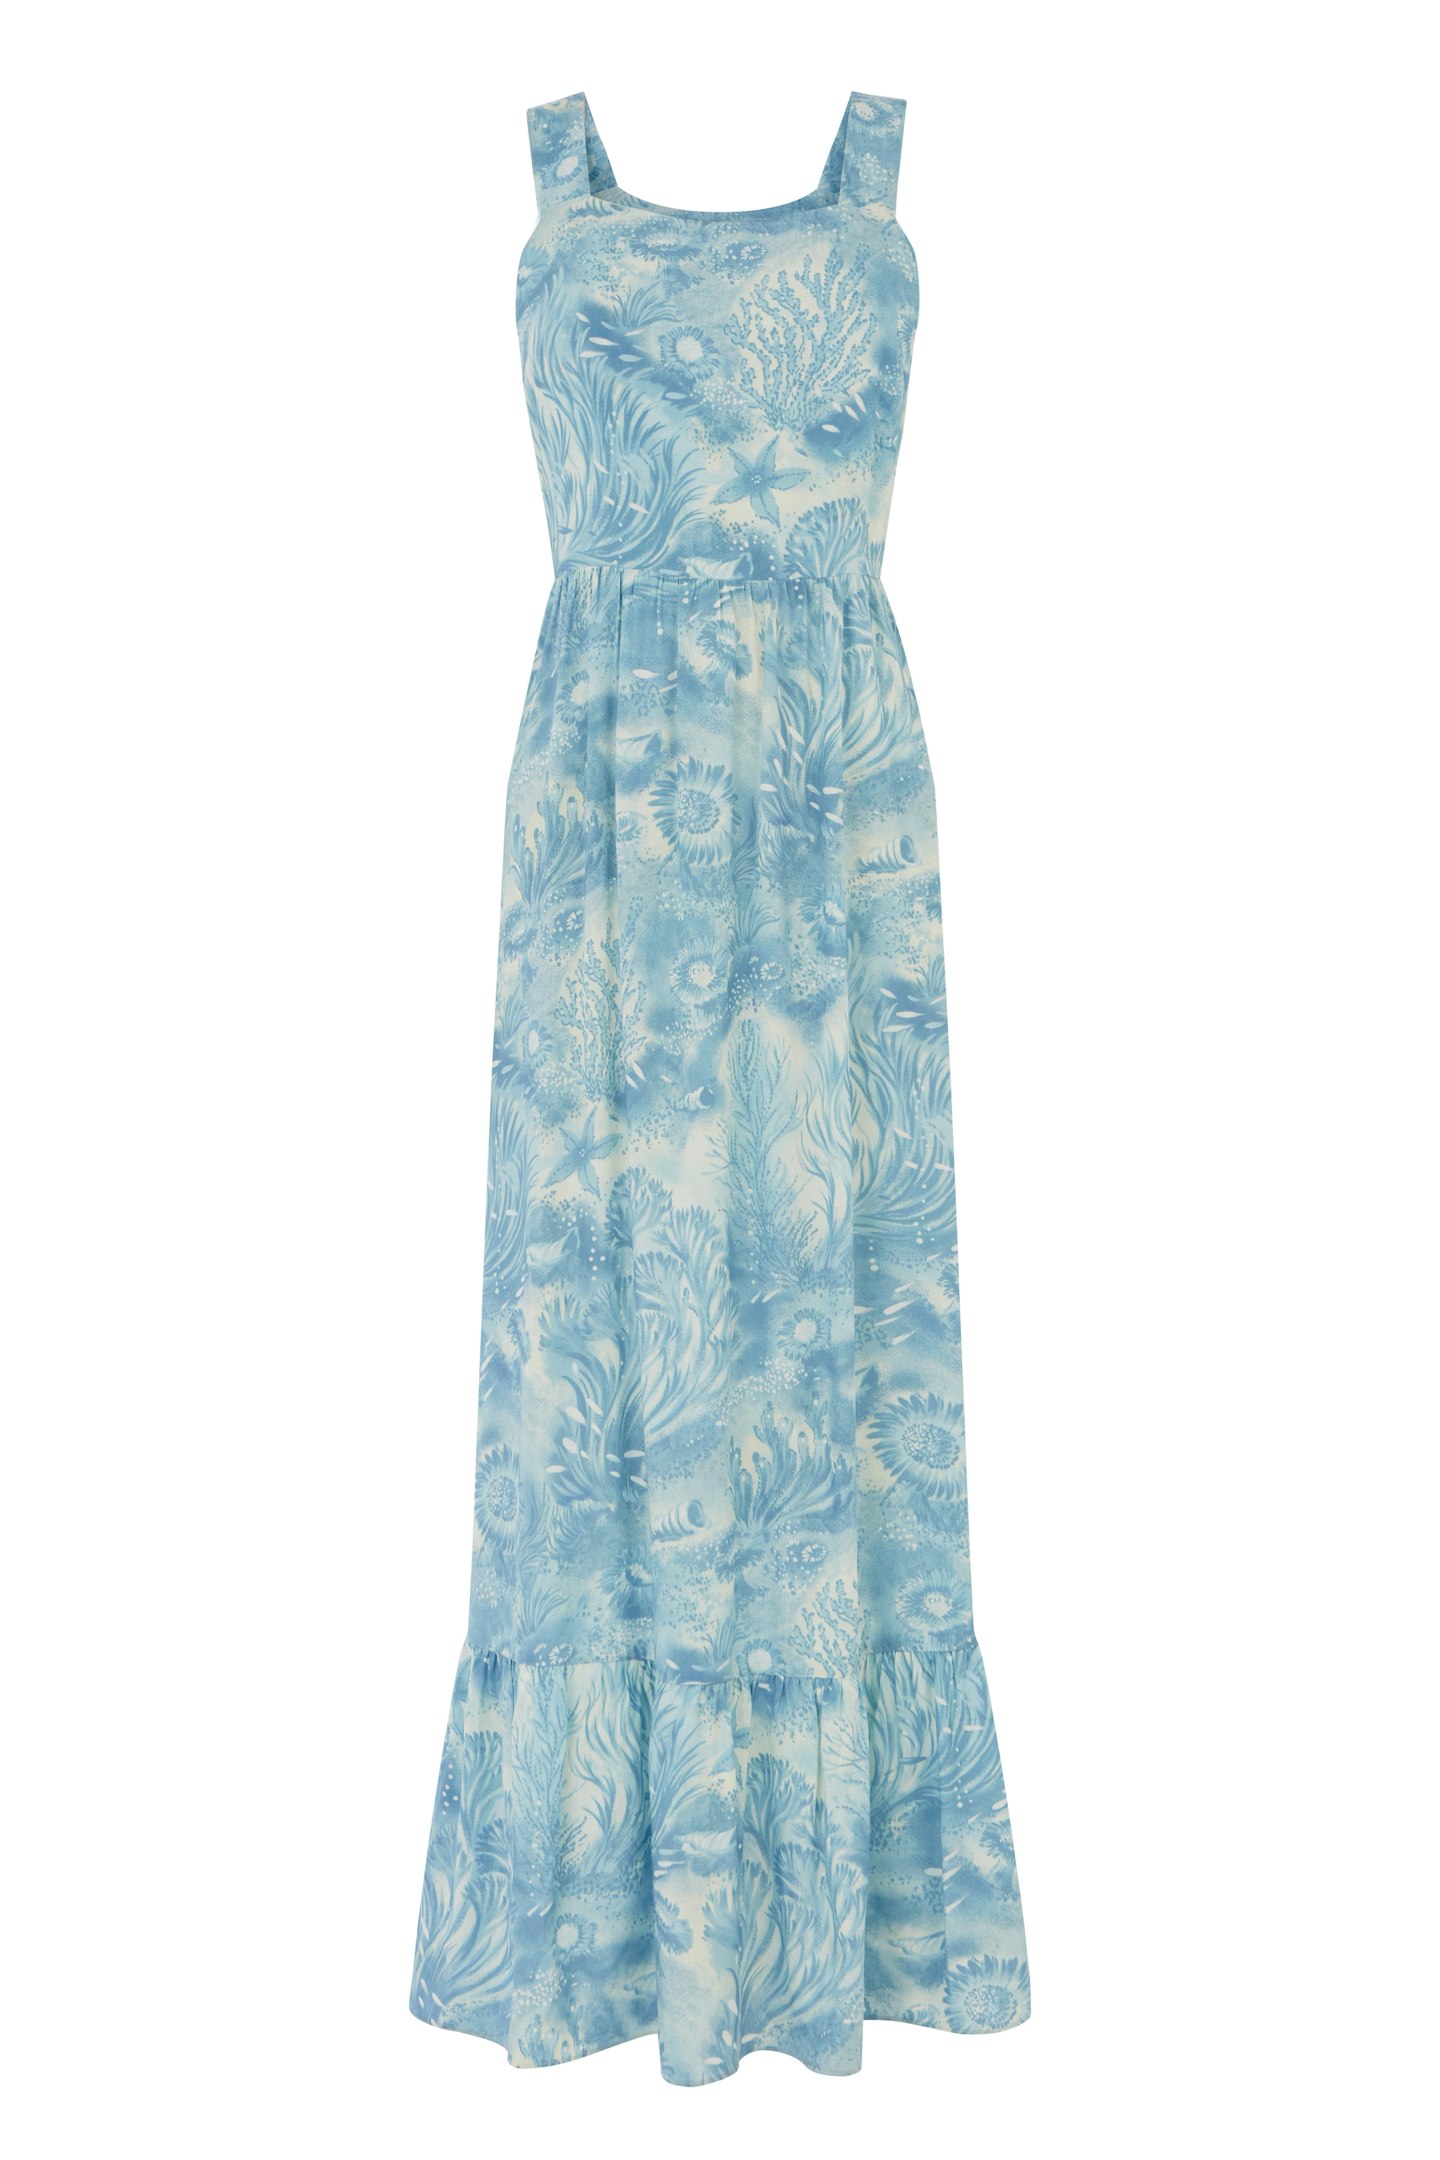 Sea Print Dress, £55